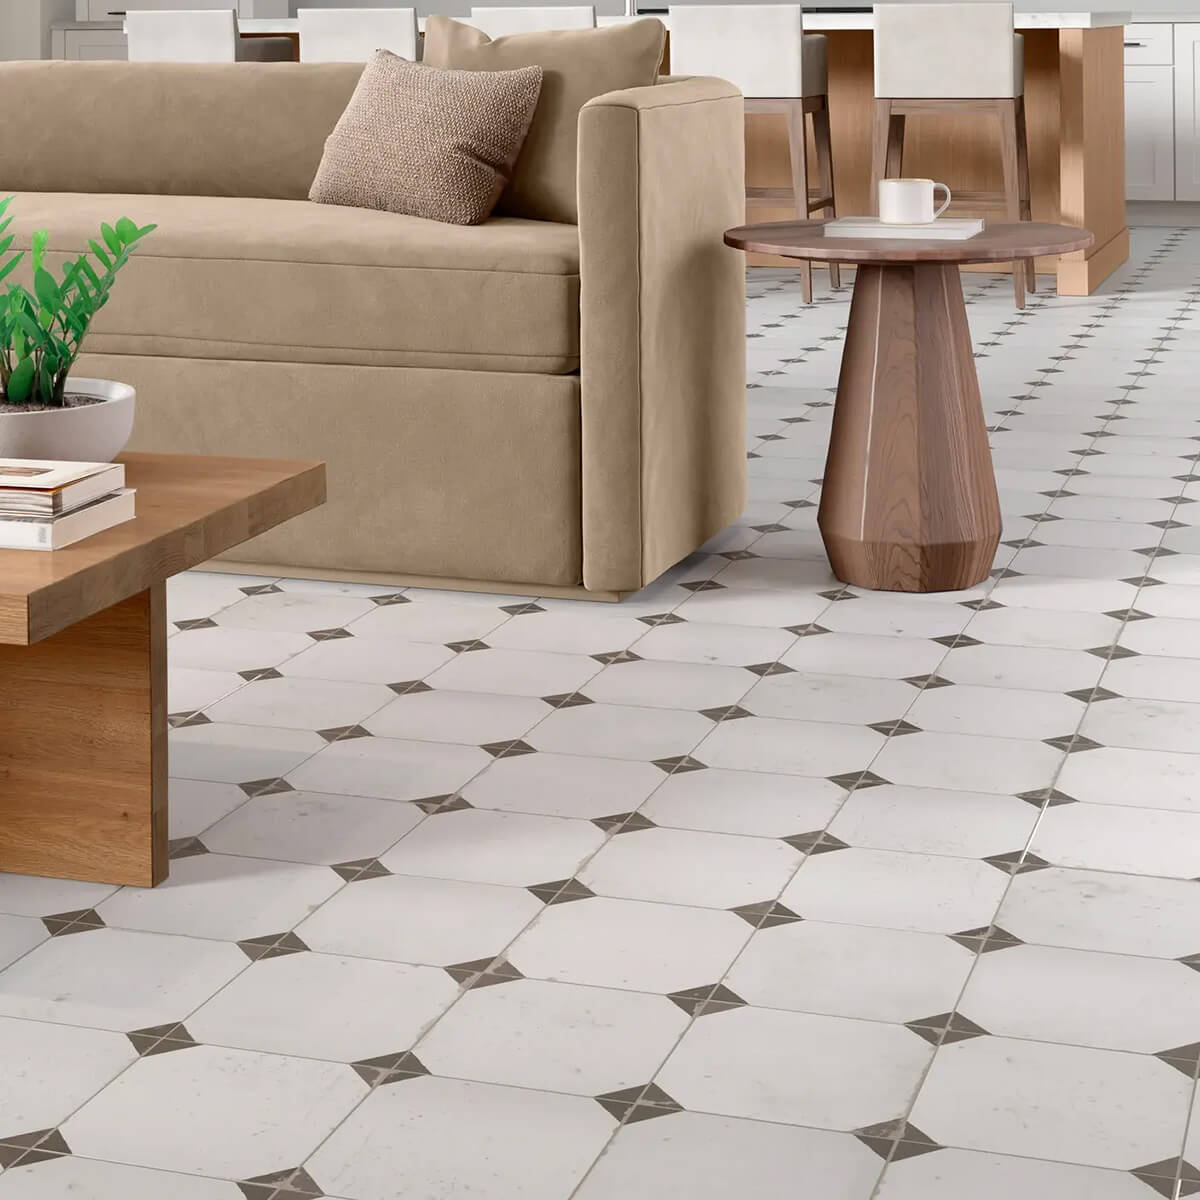 tile floor in living room | New York Carpets & Flooring | Orange County, CA